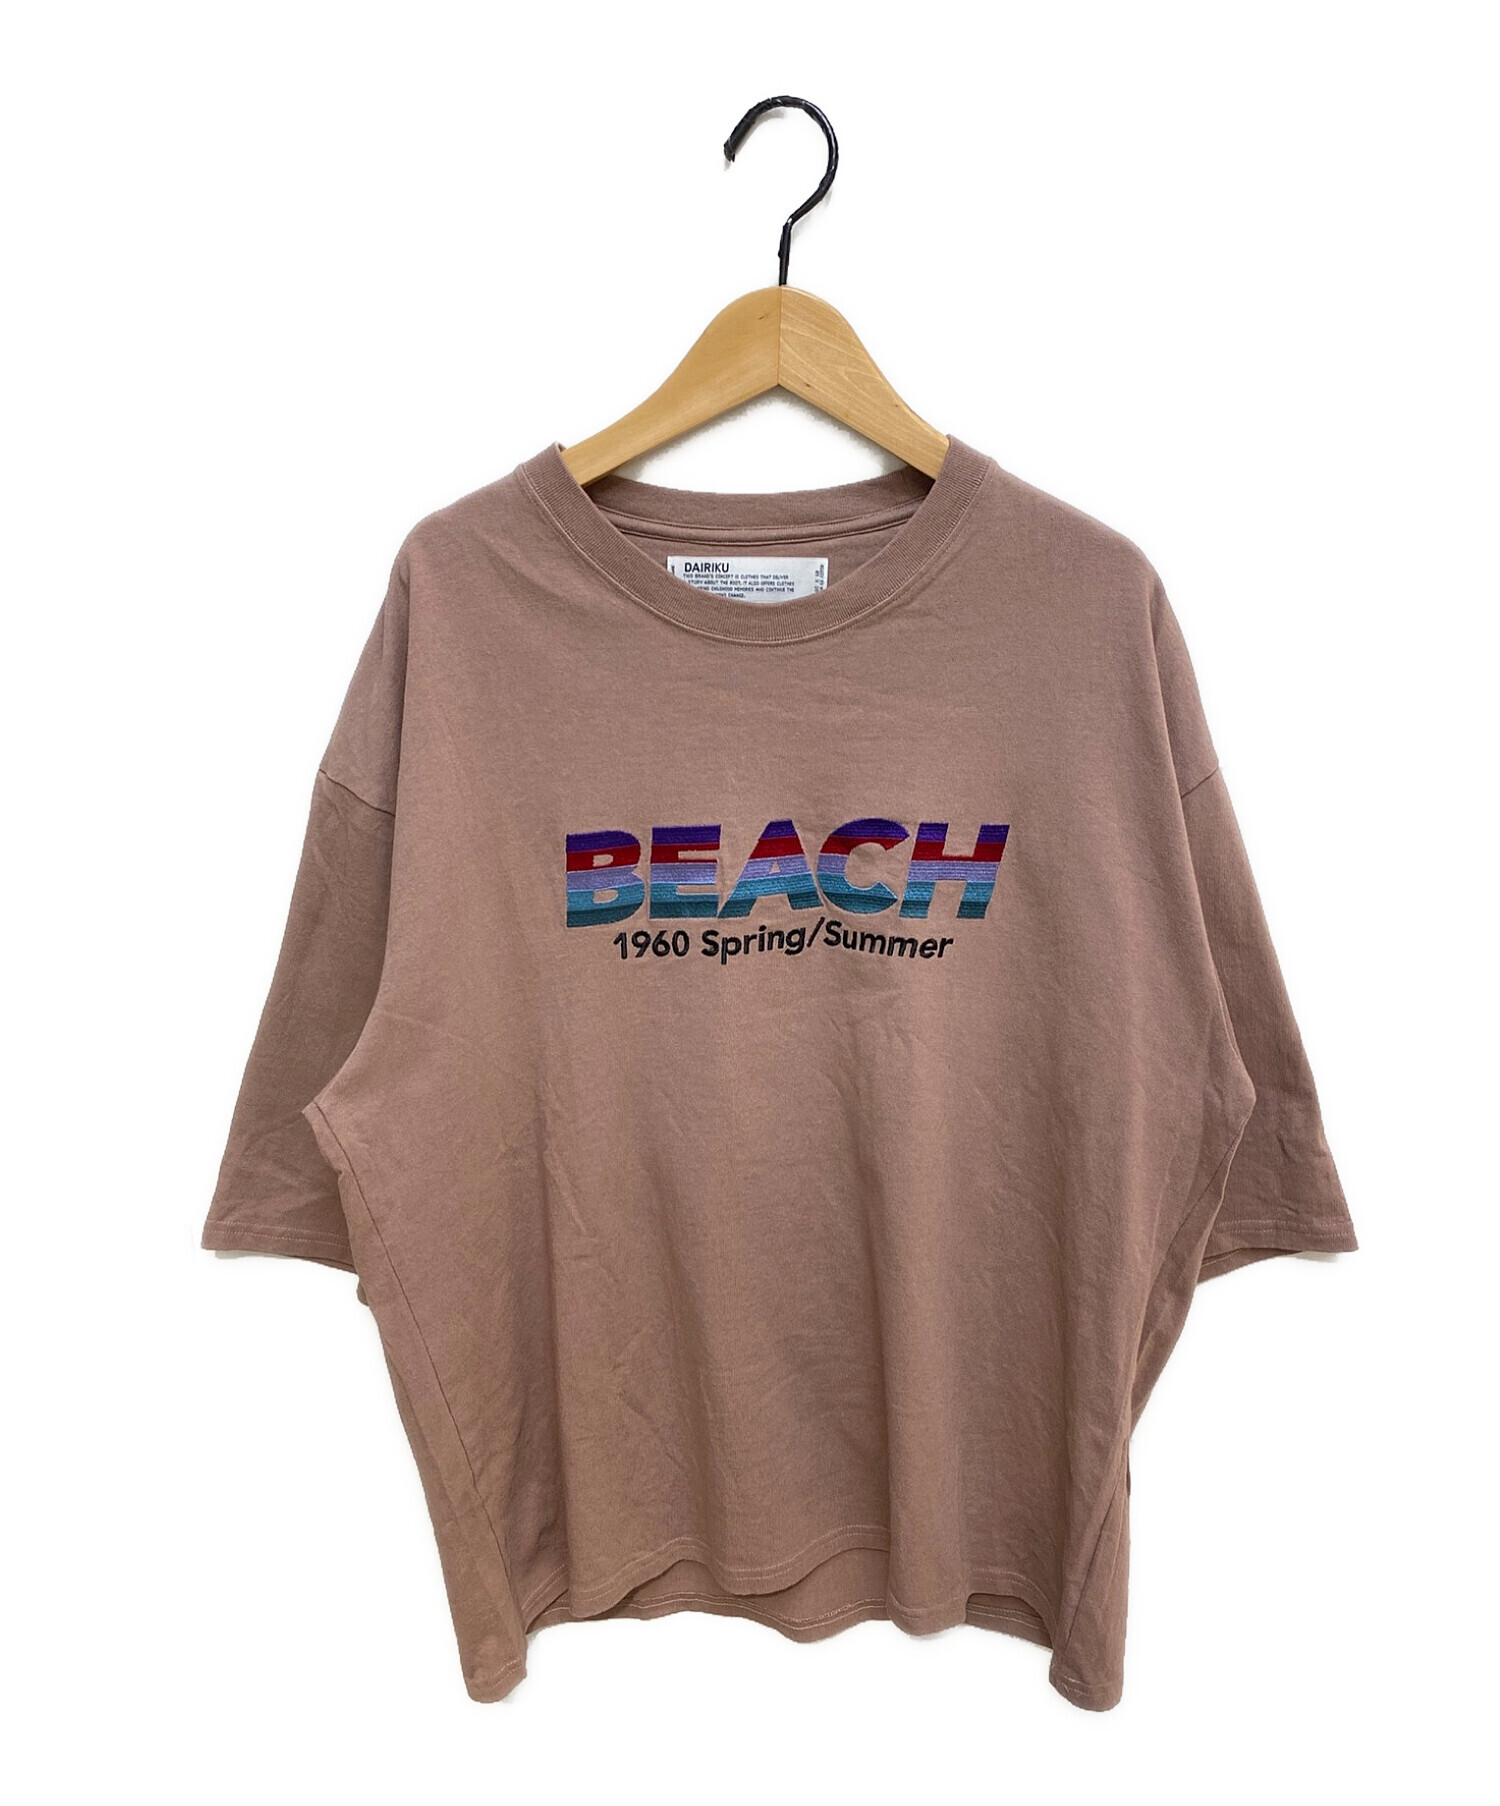 DAIRIKU (ダイリク) 20SS BEACH Half-Sleeve Tee ブラウン サイズ:FREE